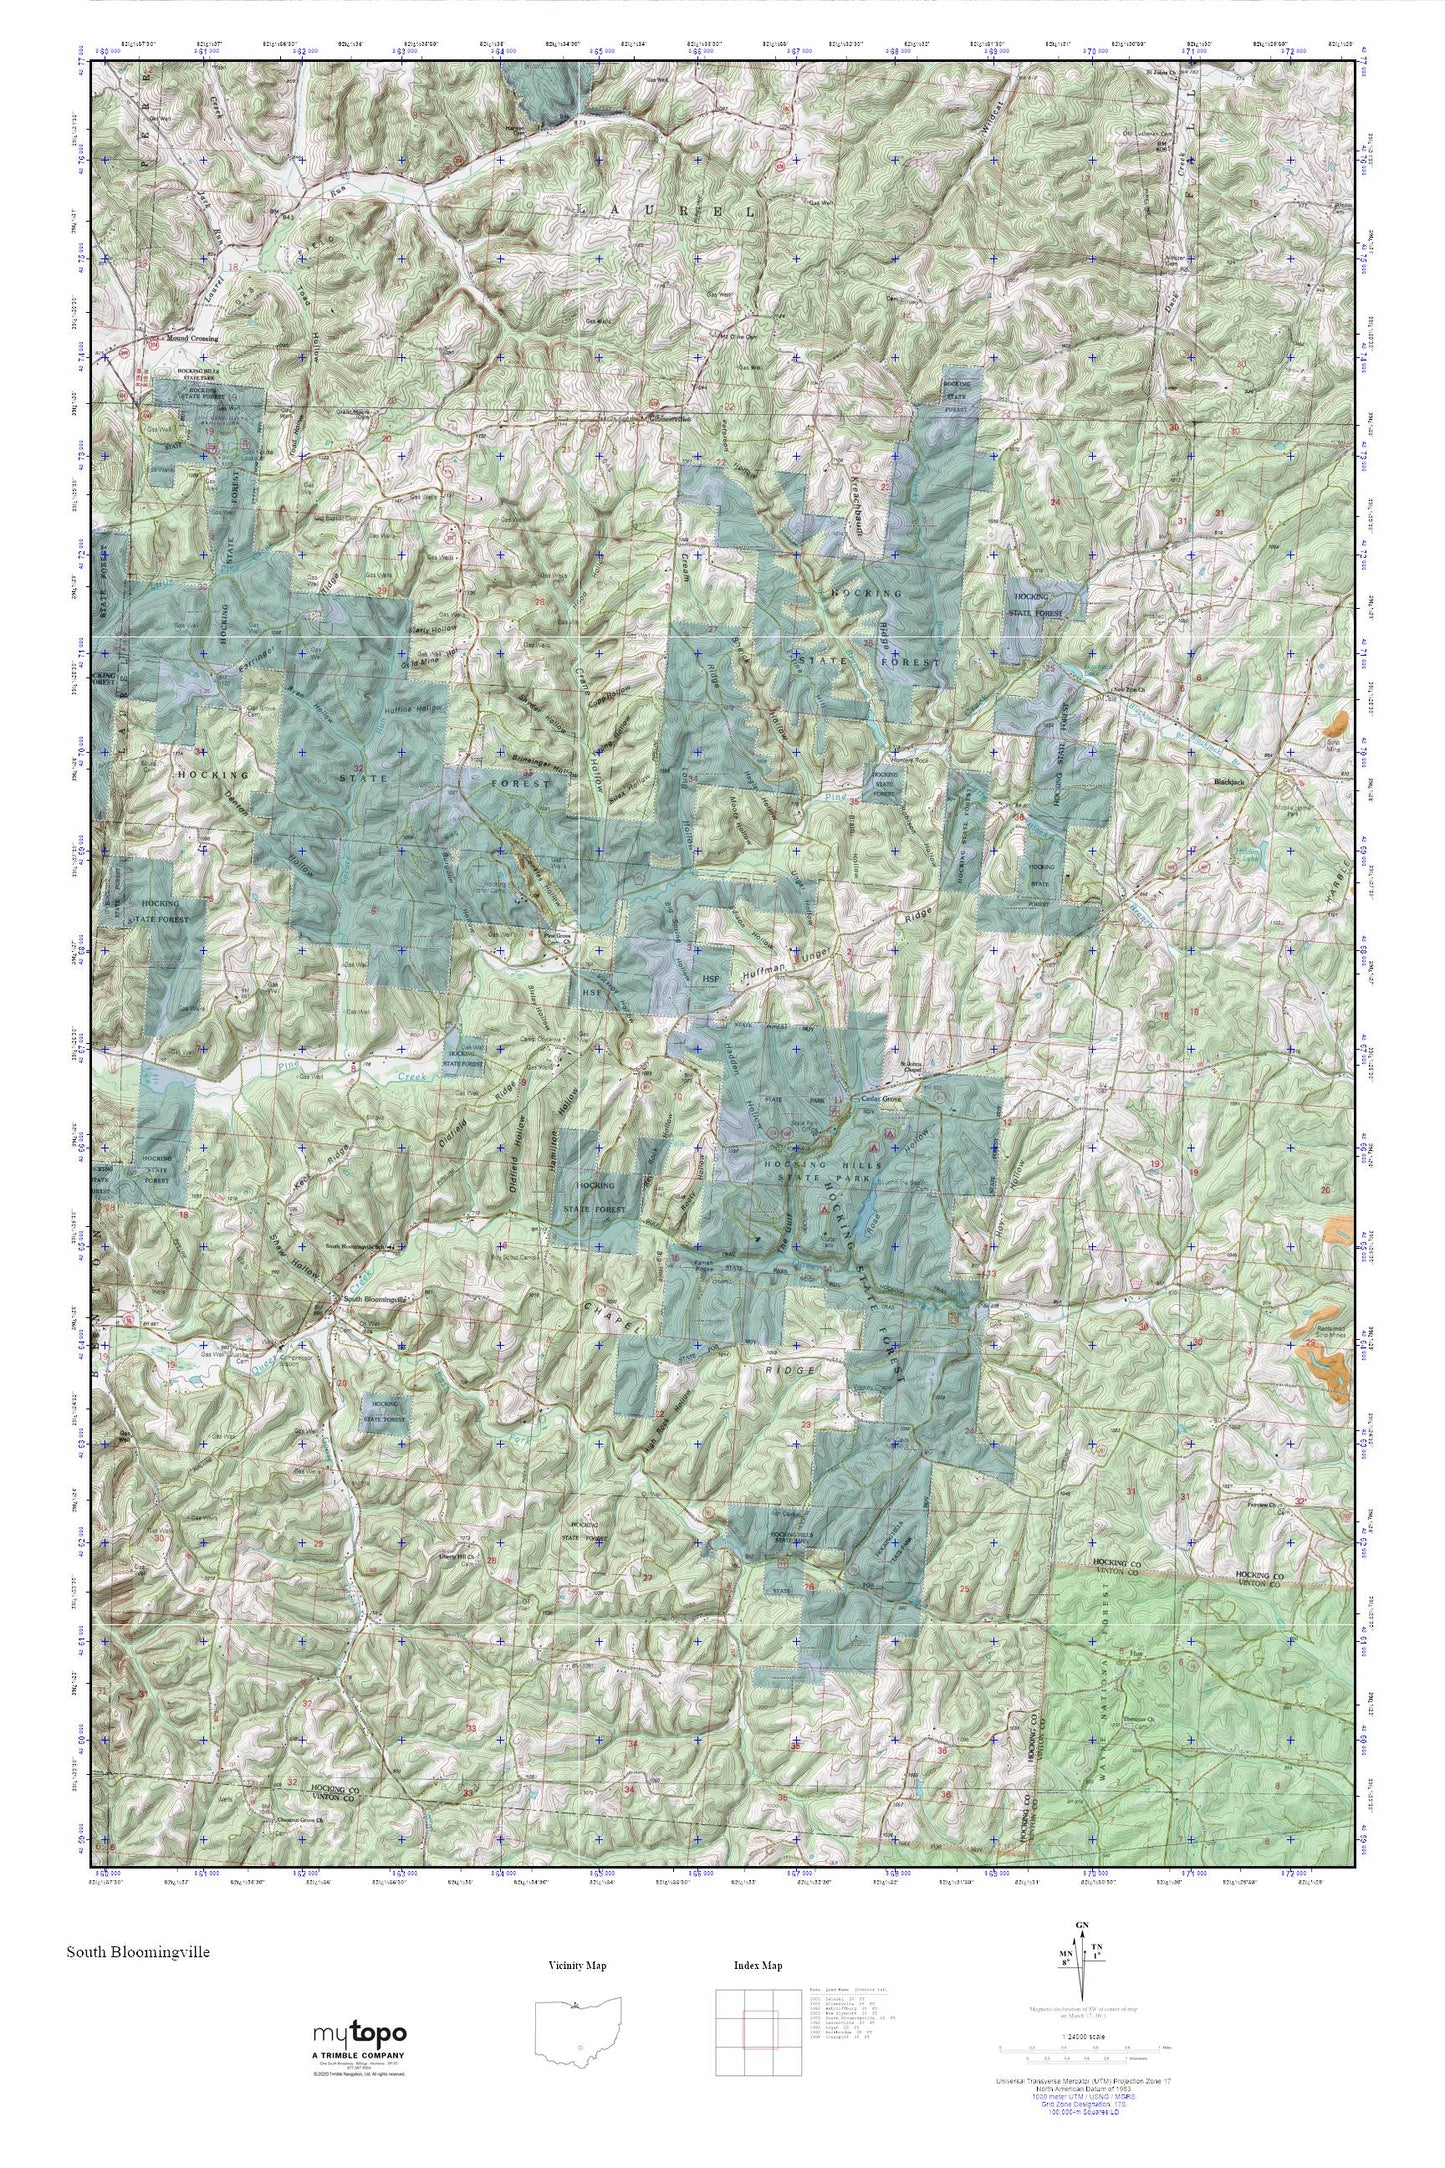 South Bloomingville MyTopo Explorer Series Map Image